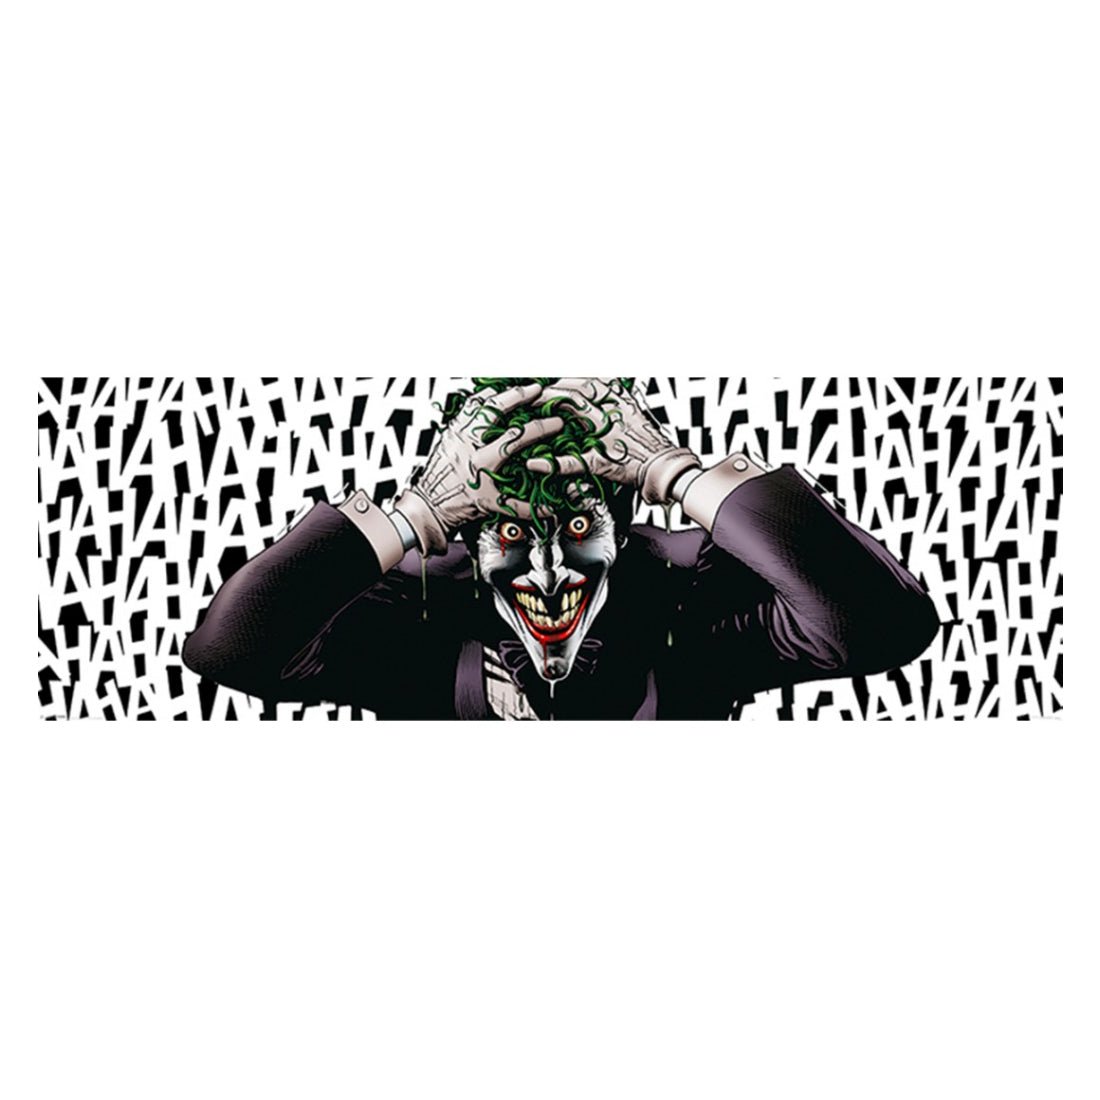 The Joker - Killing Joke Door Posters - أكسسوار - Store 974 | ستور ٩٧٤